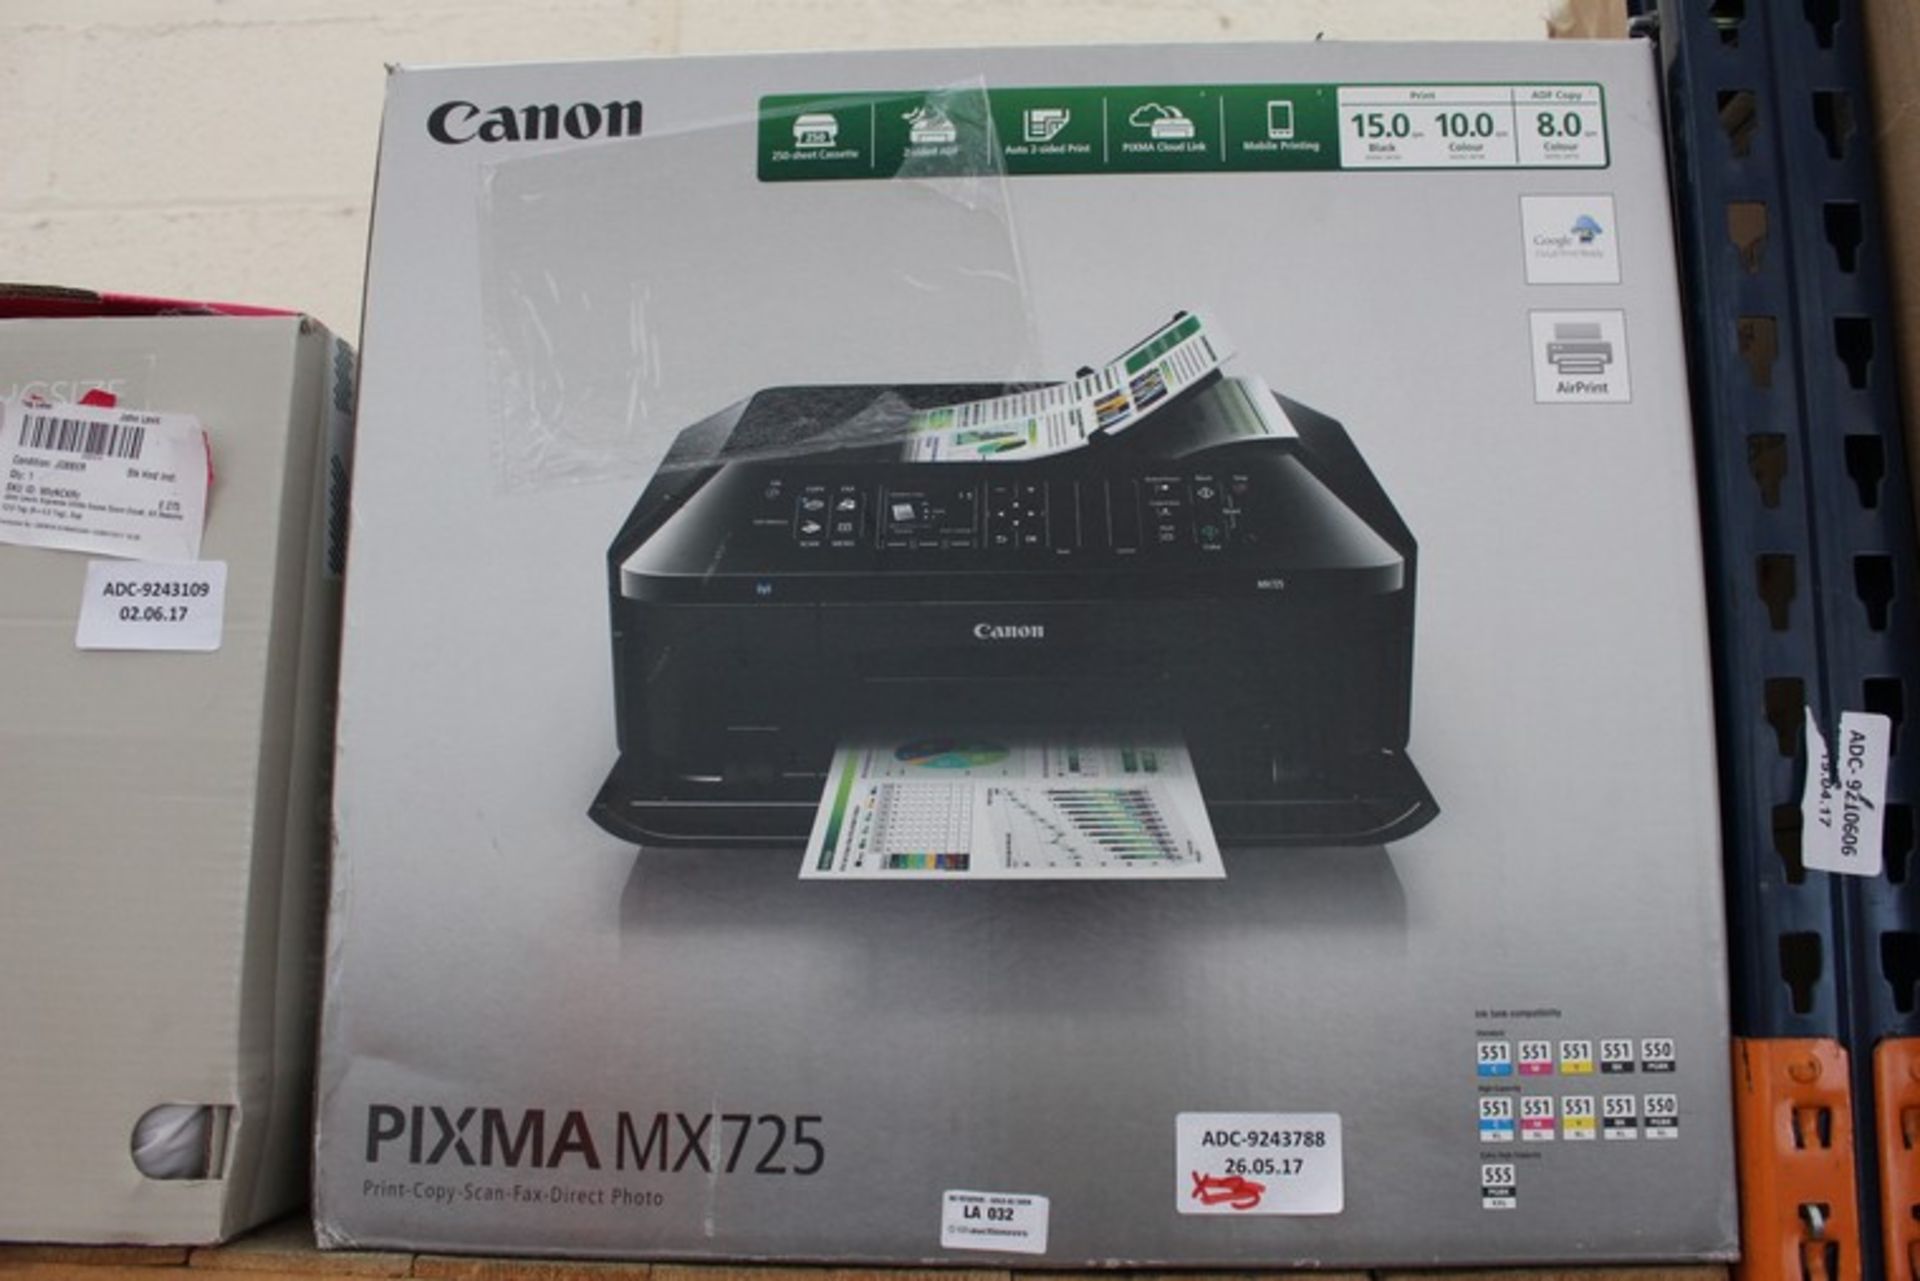 1 x BOXED CANON PIXMA MX725 PRINTER SCANNER COPIER (26.5.17) *PLEASE NOTE THAT THE BID PRICE IS